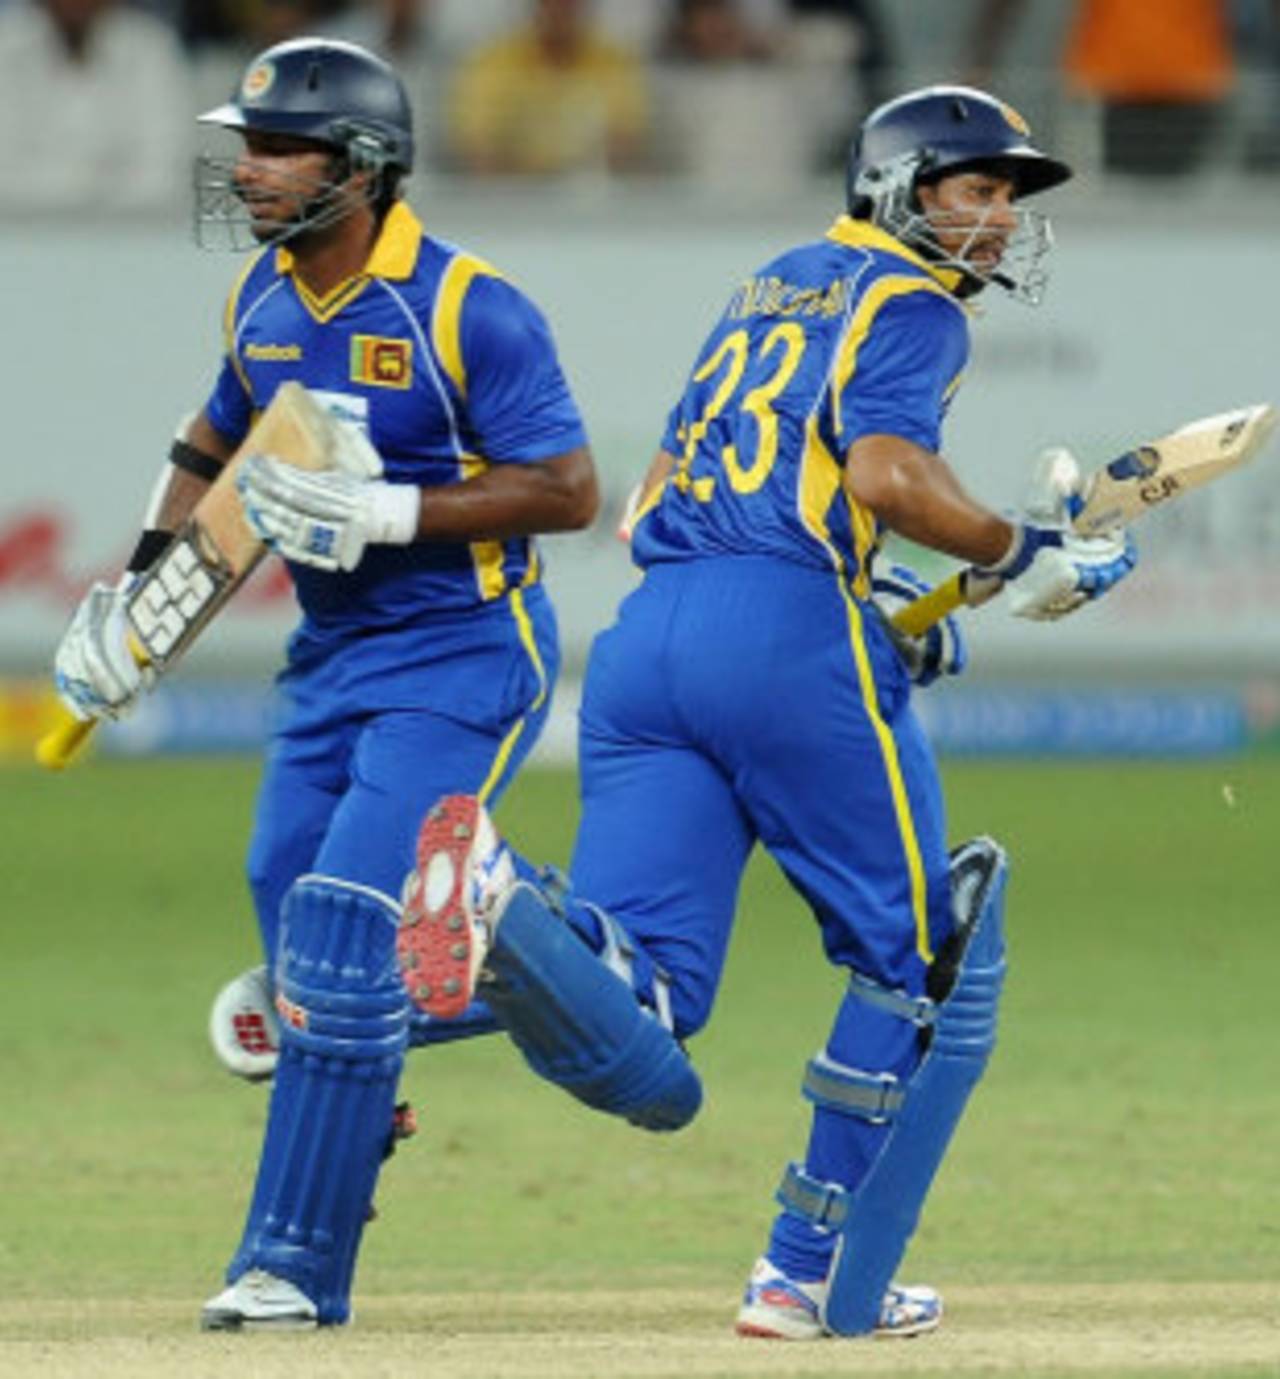 Kumar Sangakkara and Tillakaratne Dilshan run across for a single, Pakistan v Sri Lanka, 3rd ODI, Dubai, November 18, 2011